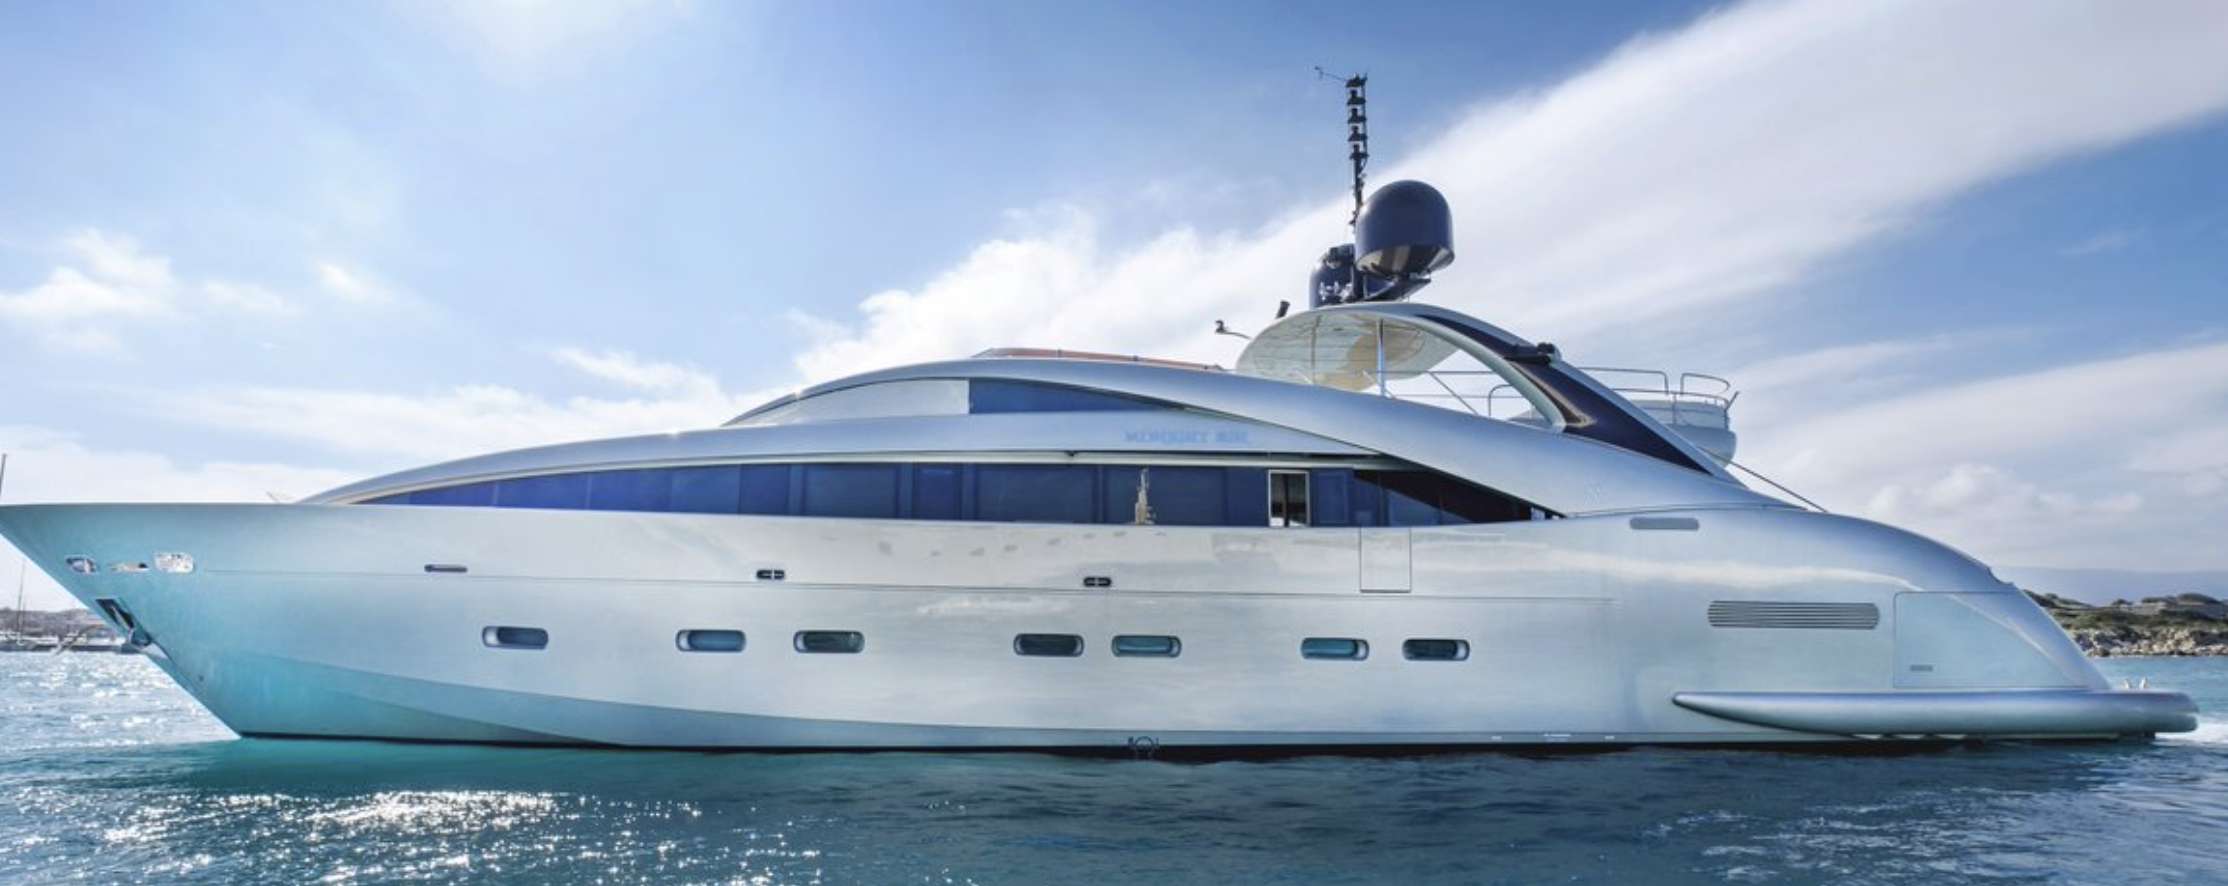 YCM 120 - Luxury yacht charter St Lucia & Boat hire in Riviera, Corsica, Sardinia, Spain, Balearics, Caribbean 4